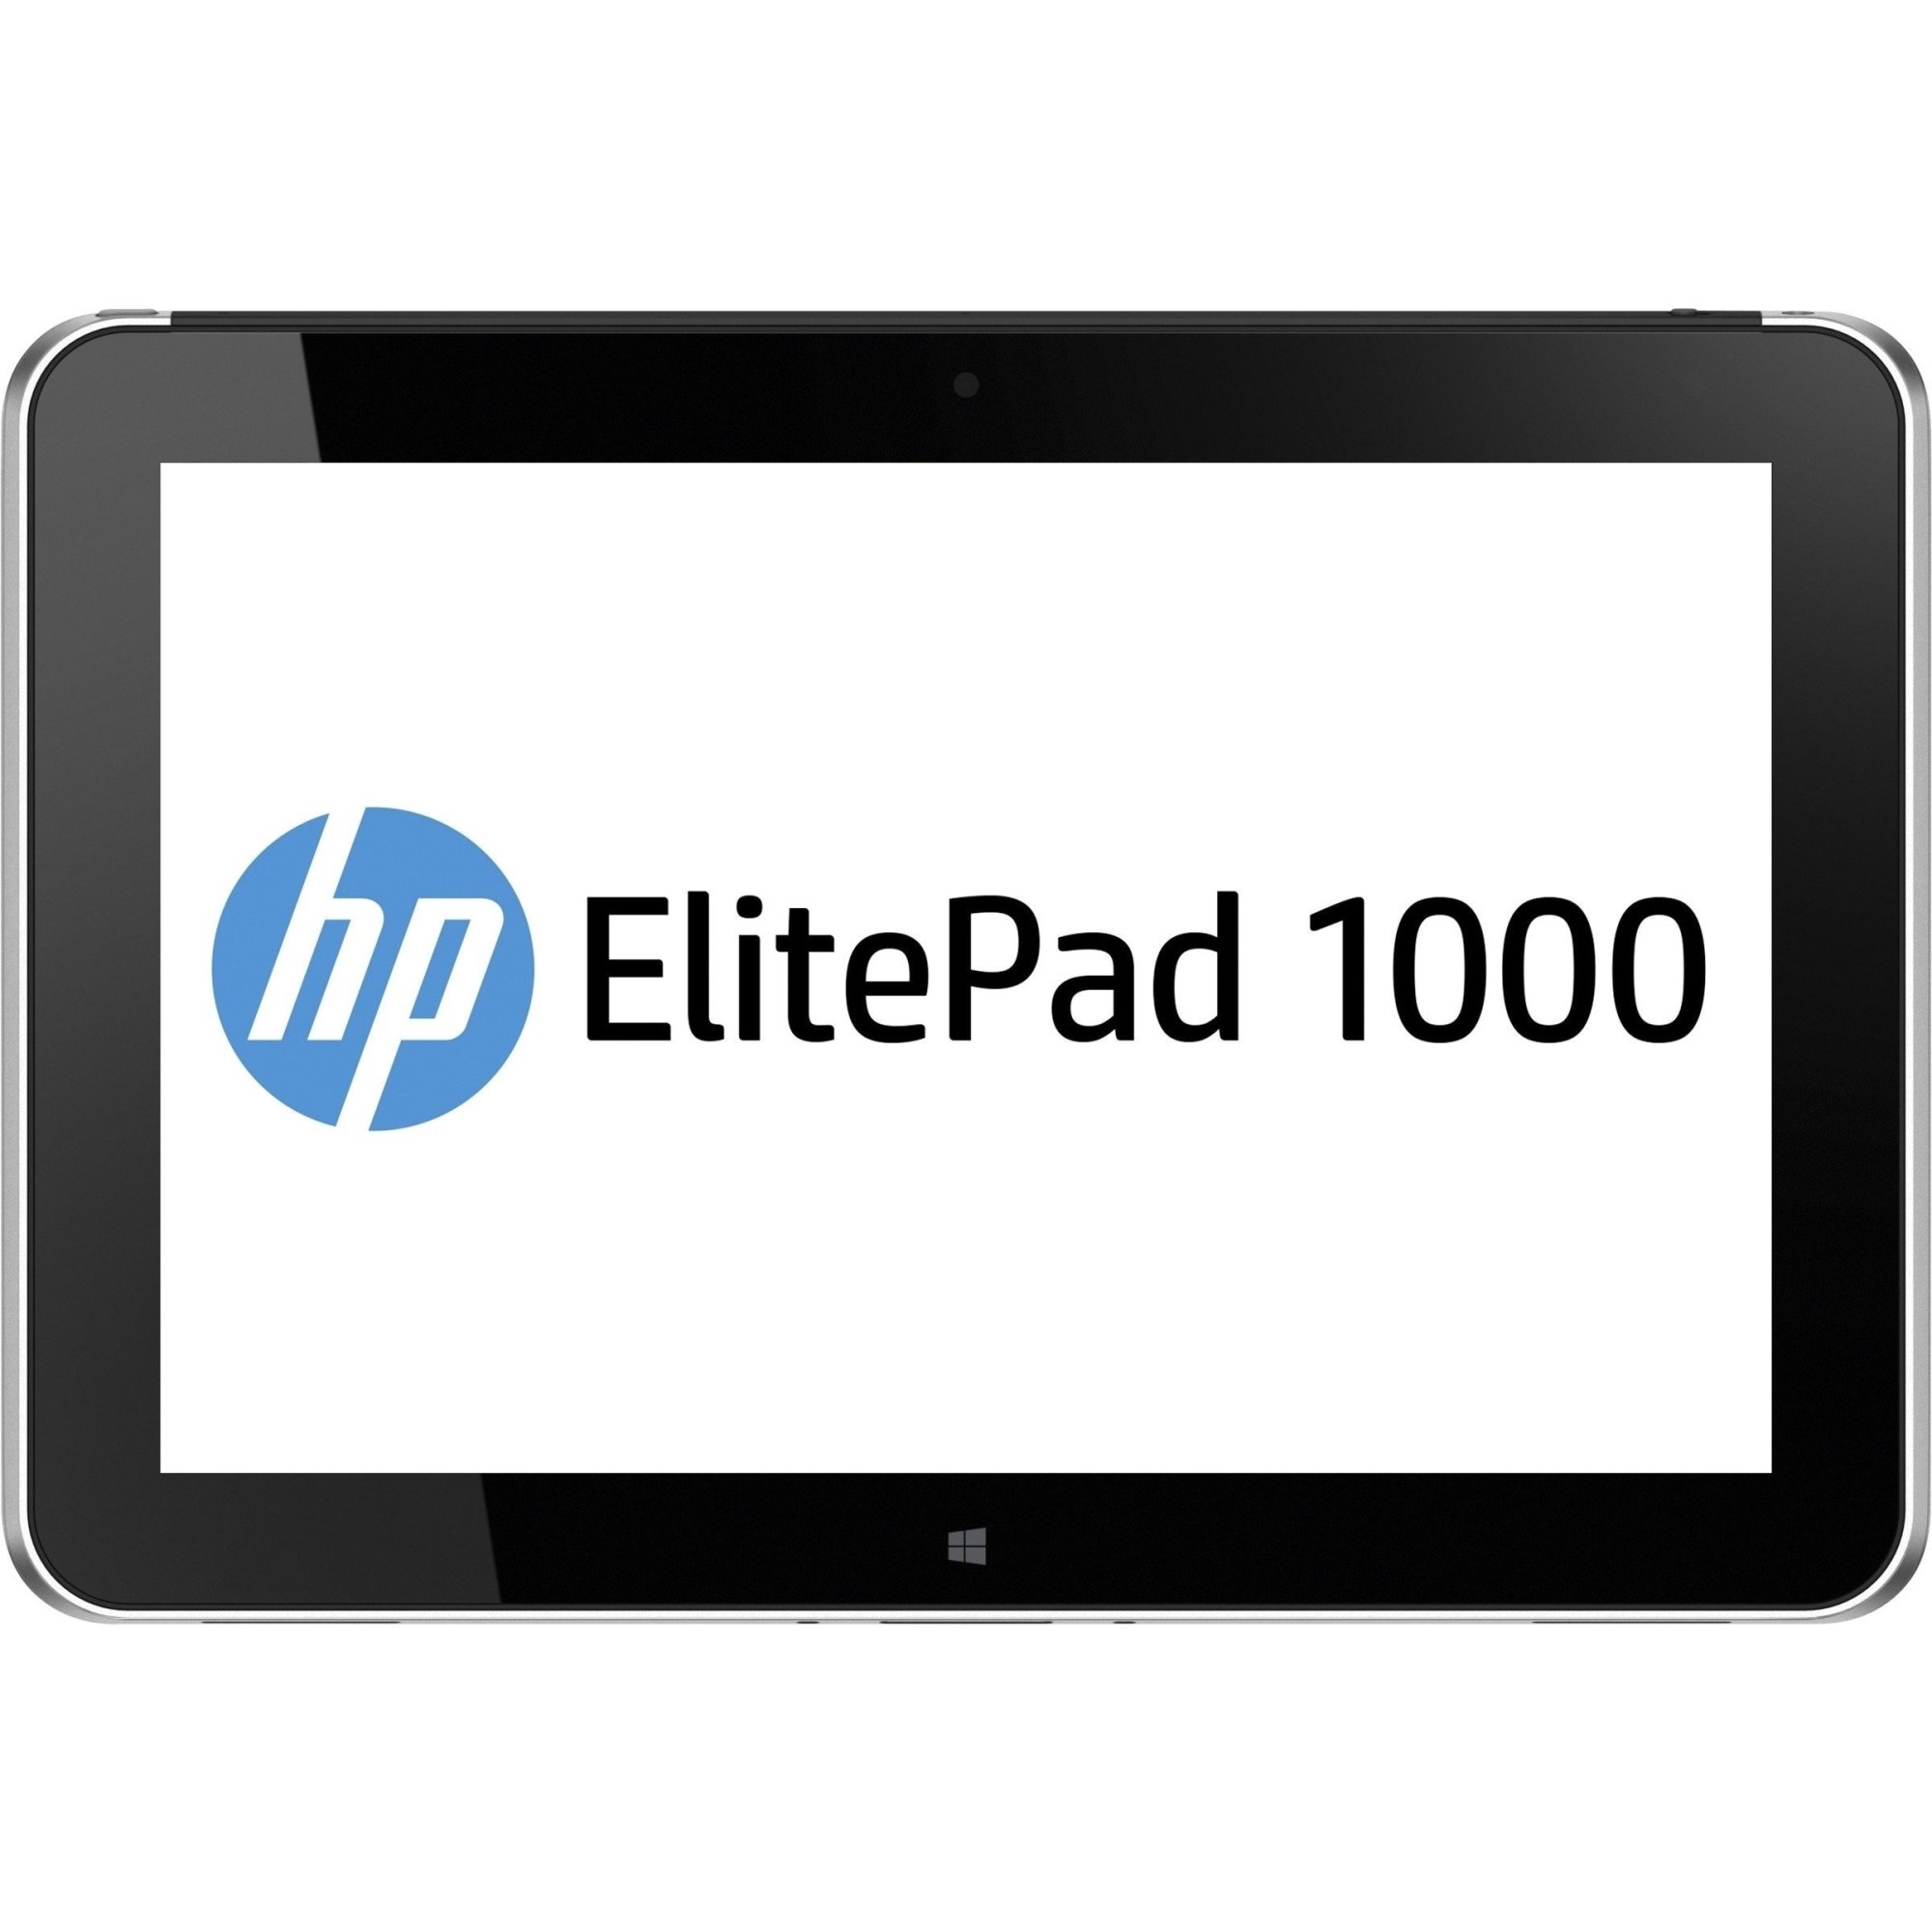 HP J5N62UT ElitePad 1000 G2 - Tablet - no keyboard - Atom Z3795 / 1.6 GHz - Windows 8.1 Pro 64-bit - 4 GB RAM - 64 GB SSD - 10.1 inch touchscreen 1920 x 1200 - Intel HD Graphics - Smart Buy